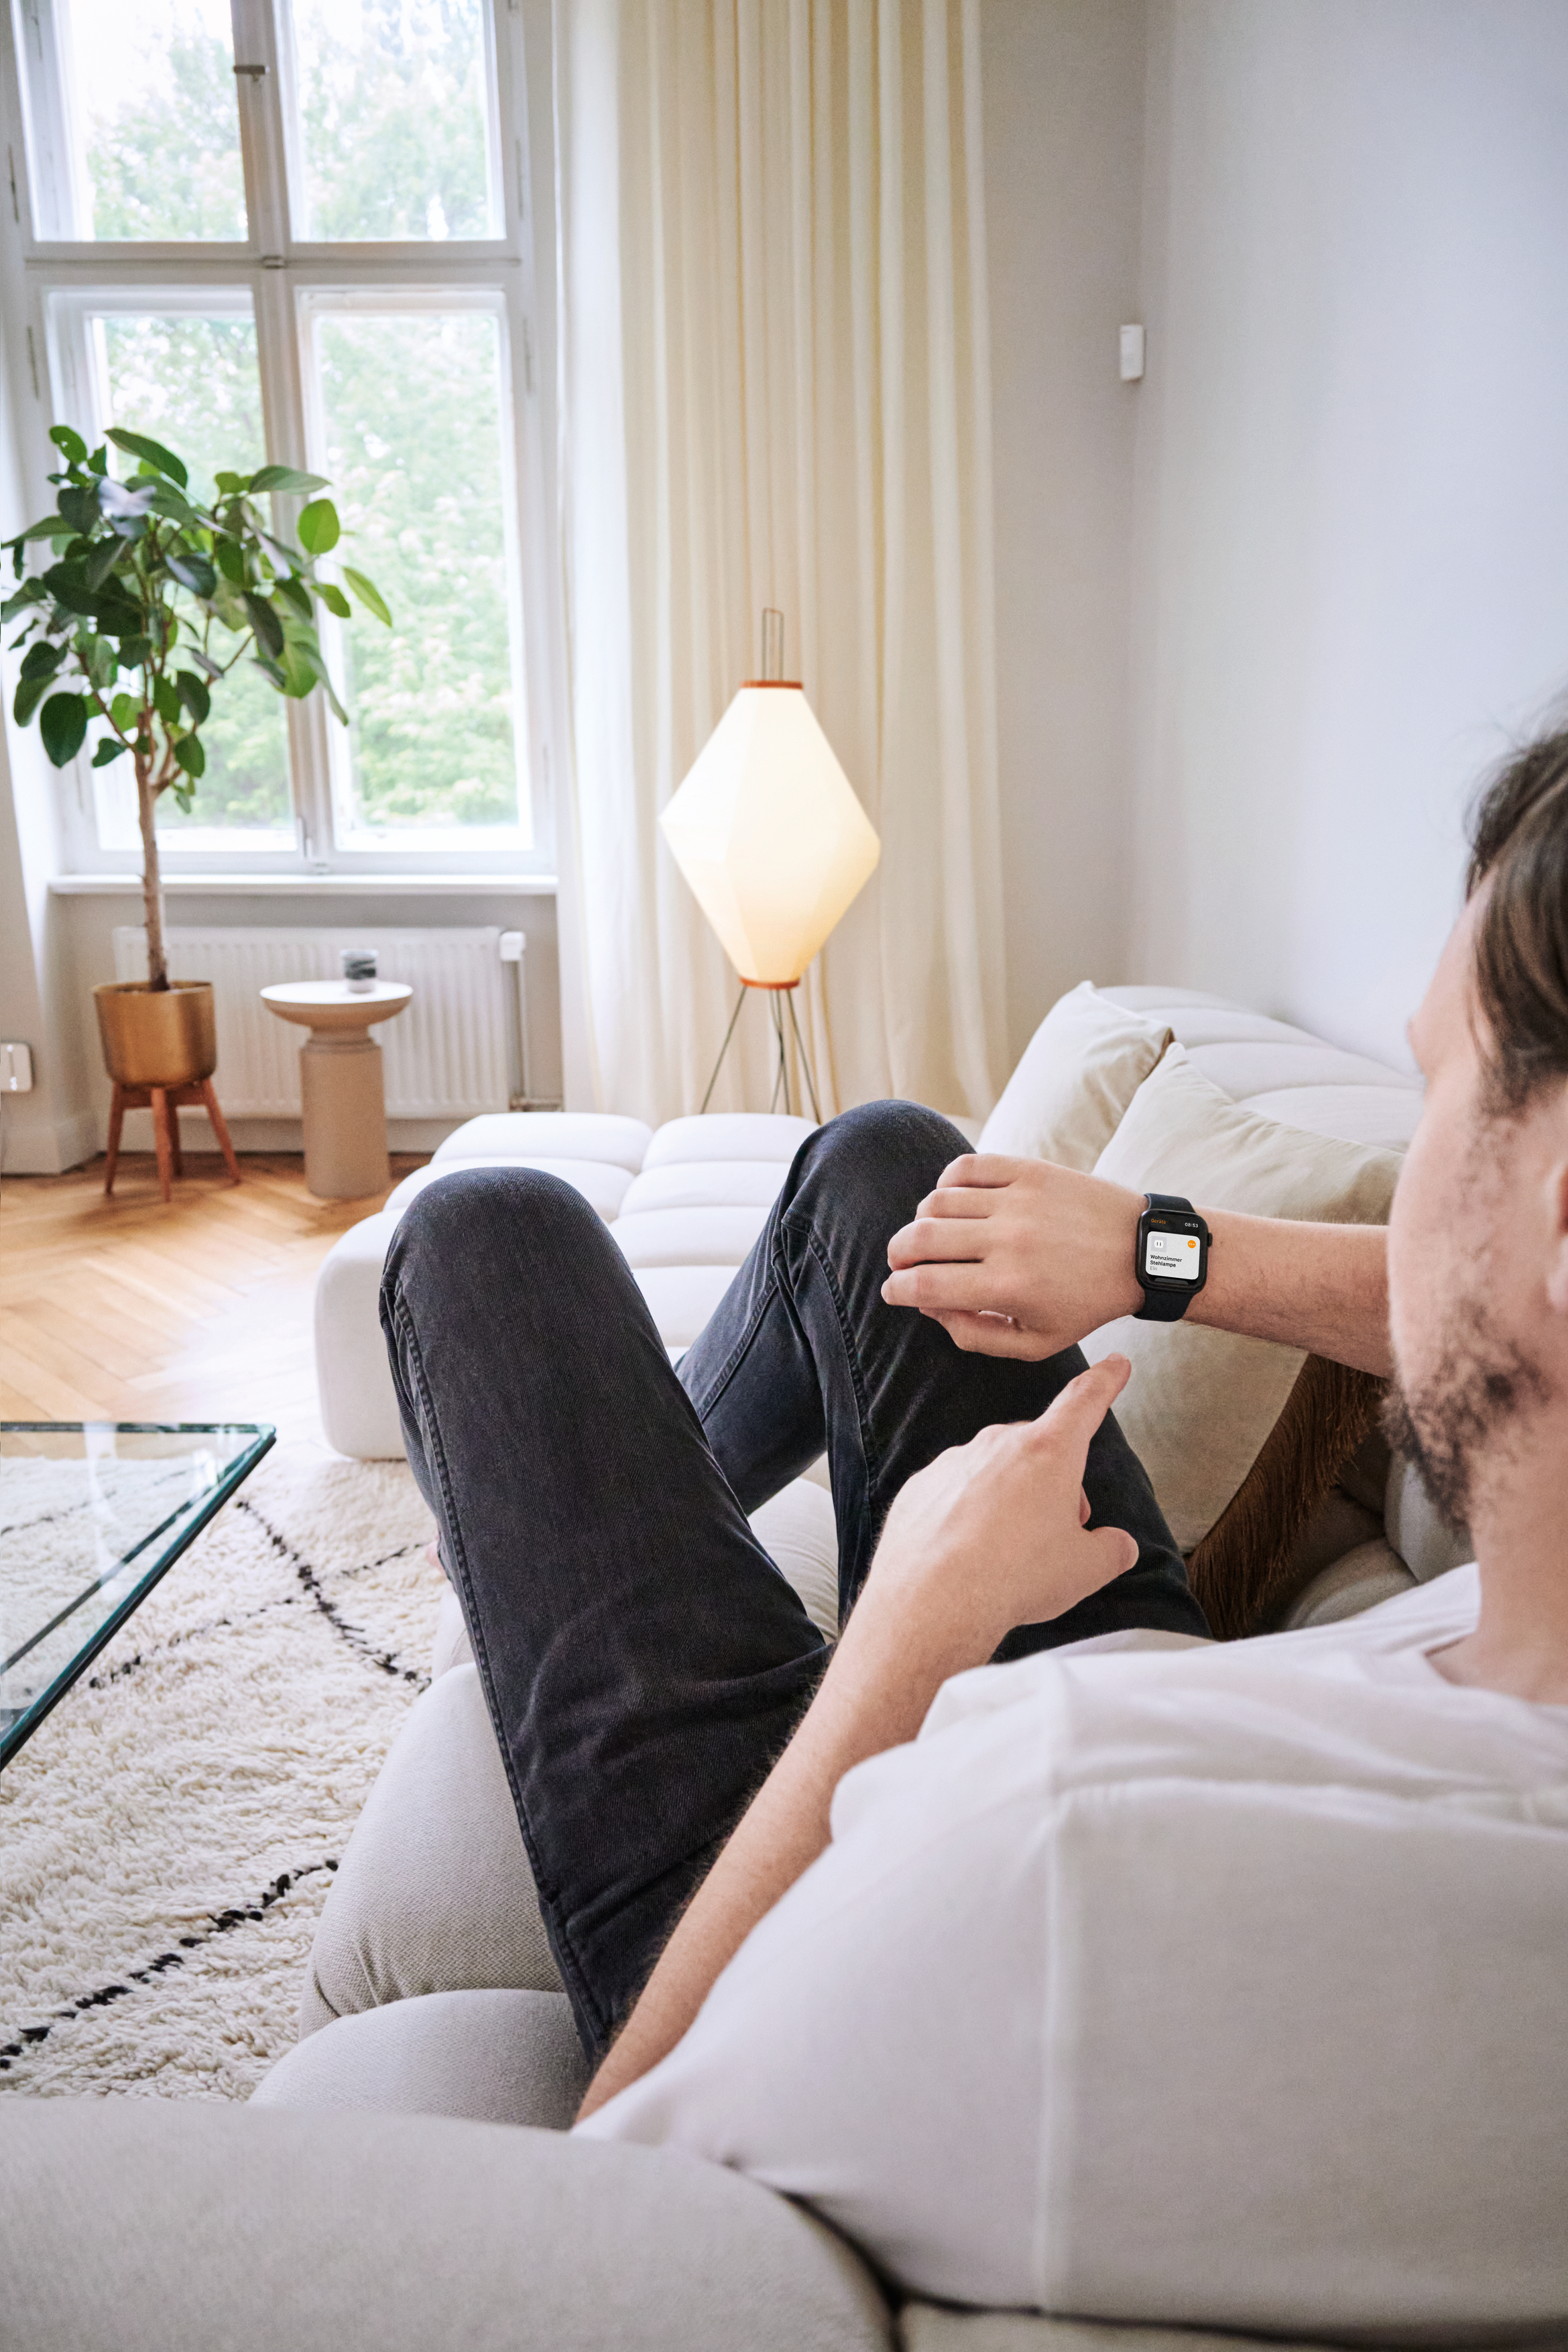 Bosch Smart Home controlled via Apple Watch